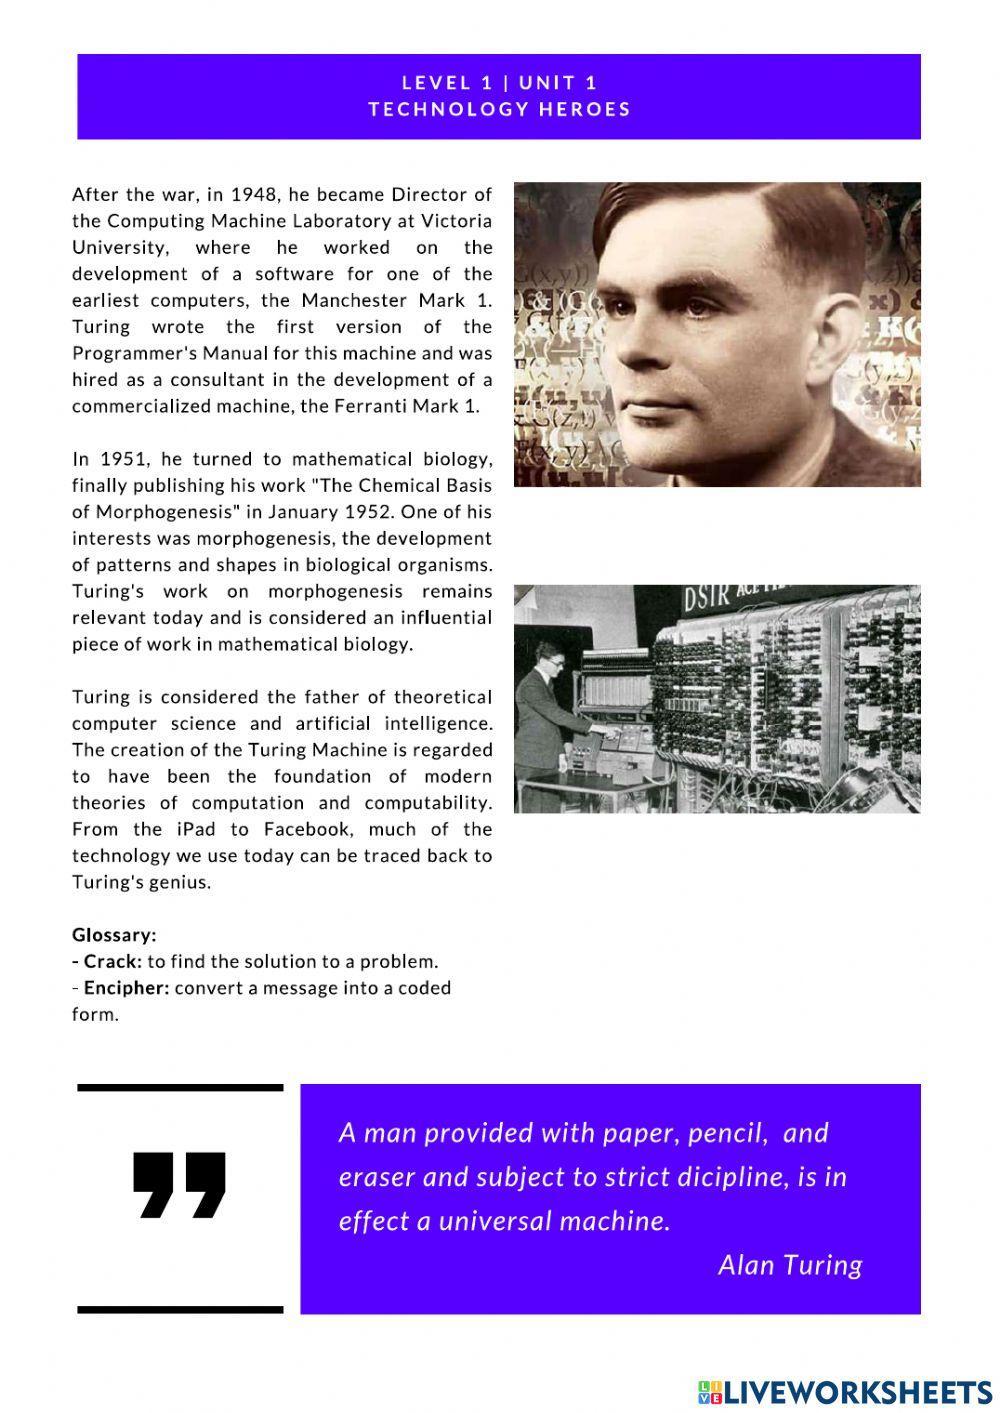 2022 Unit 1 reading 3 Alan Turing